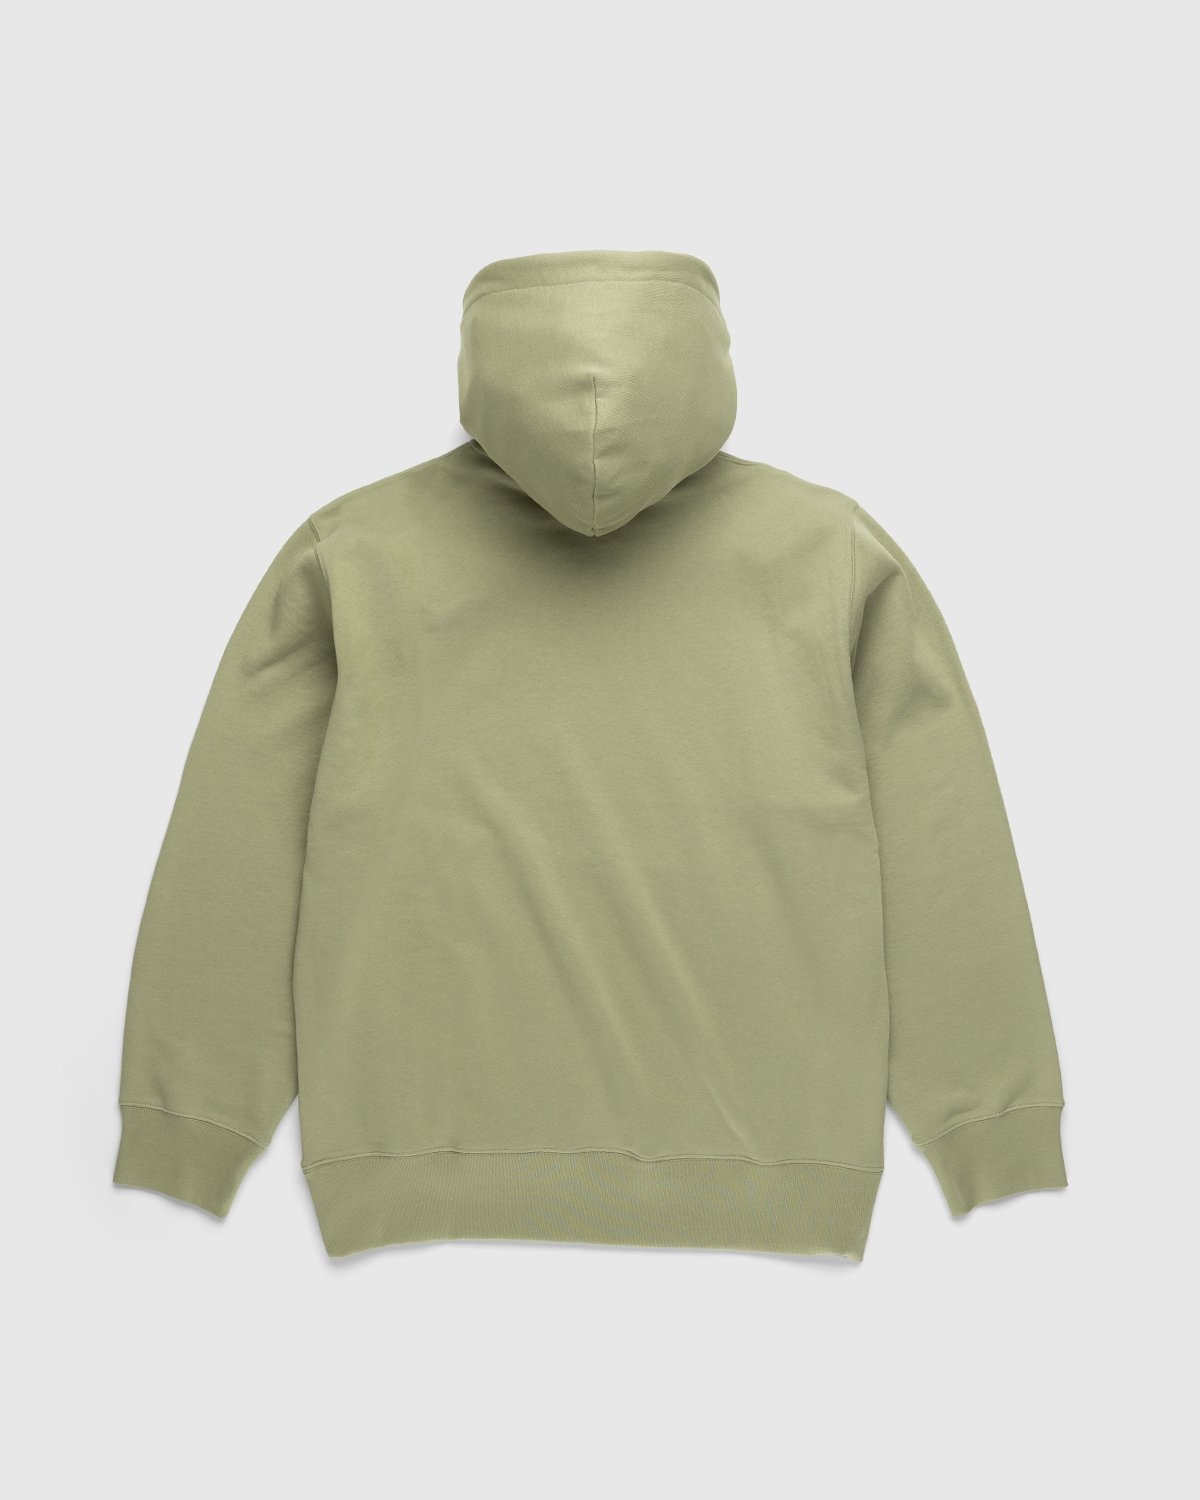 Acne Studios – Organic Cotton Hooded Sweatshirt Eucalyptus Green - Sweats - Green - Image 2